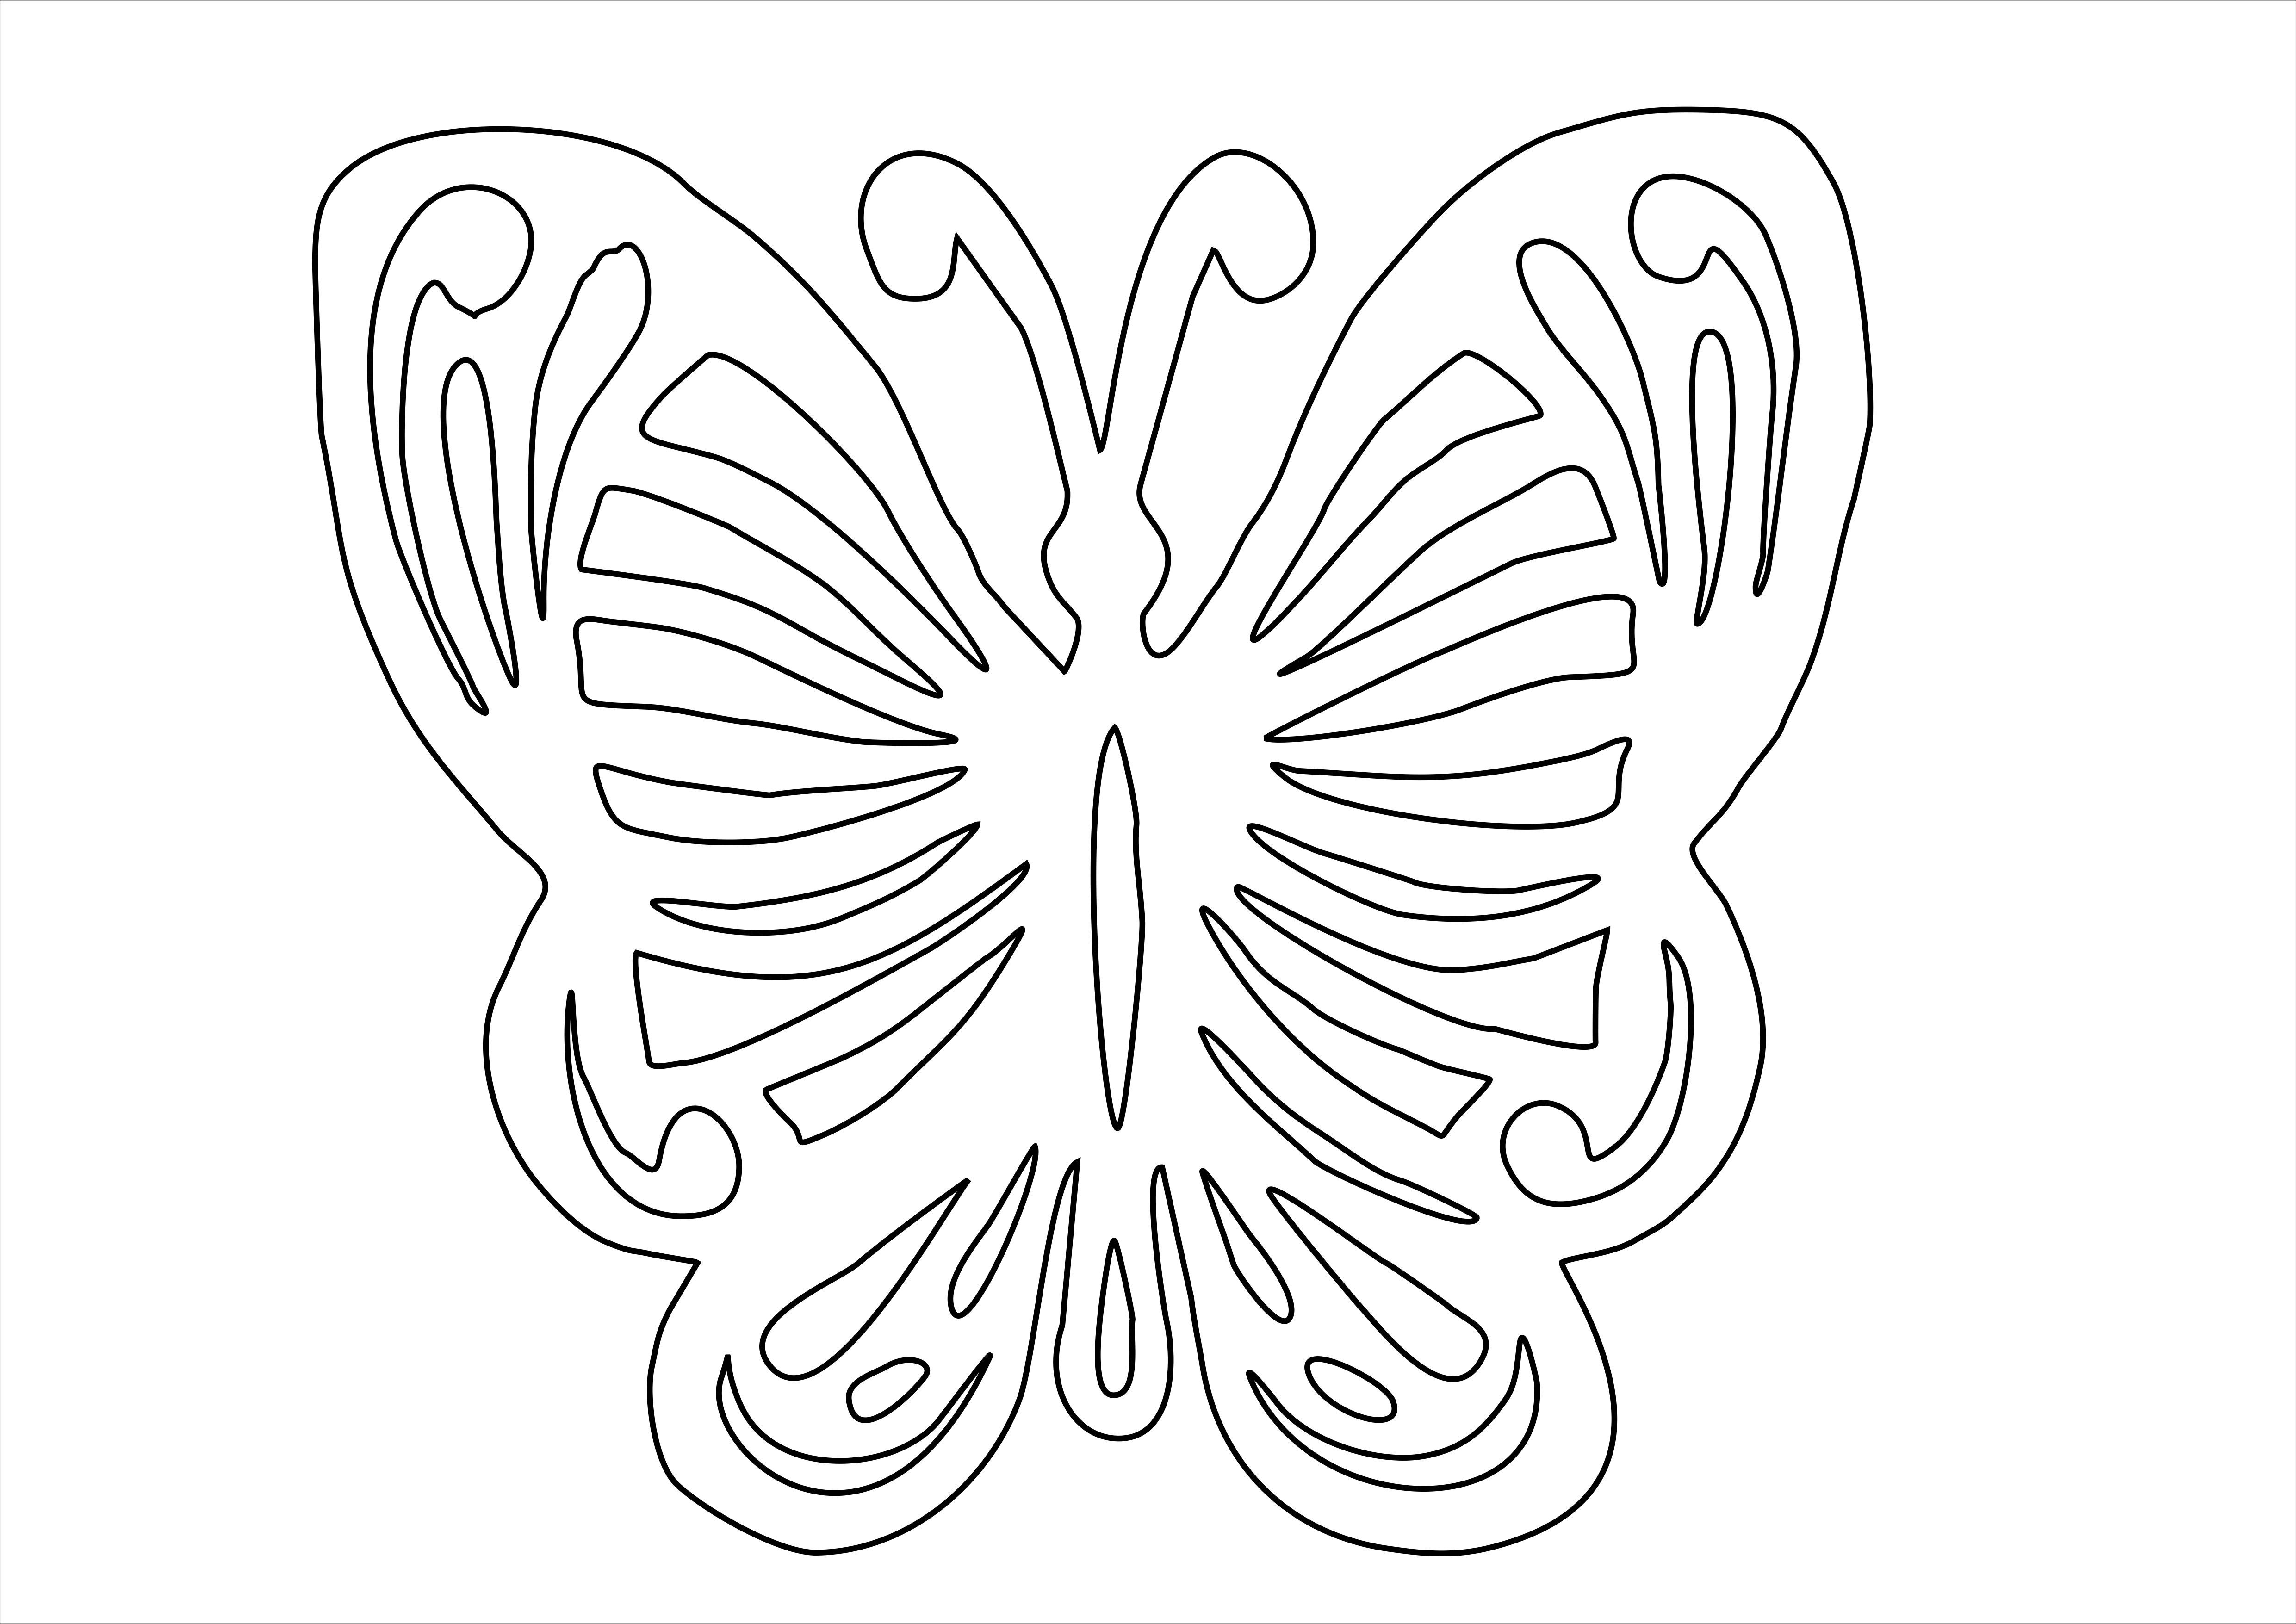 8 вырезалка. Трафарет бабочки для вырезания. Бабочка шаблон для вырезания. Бабочка рисунок трафарет для вырезания. Бабочки шавблоныдлявырезания.